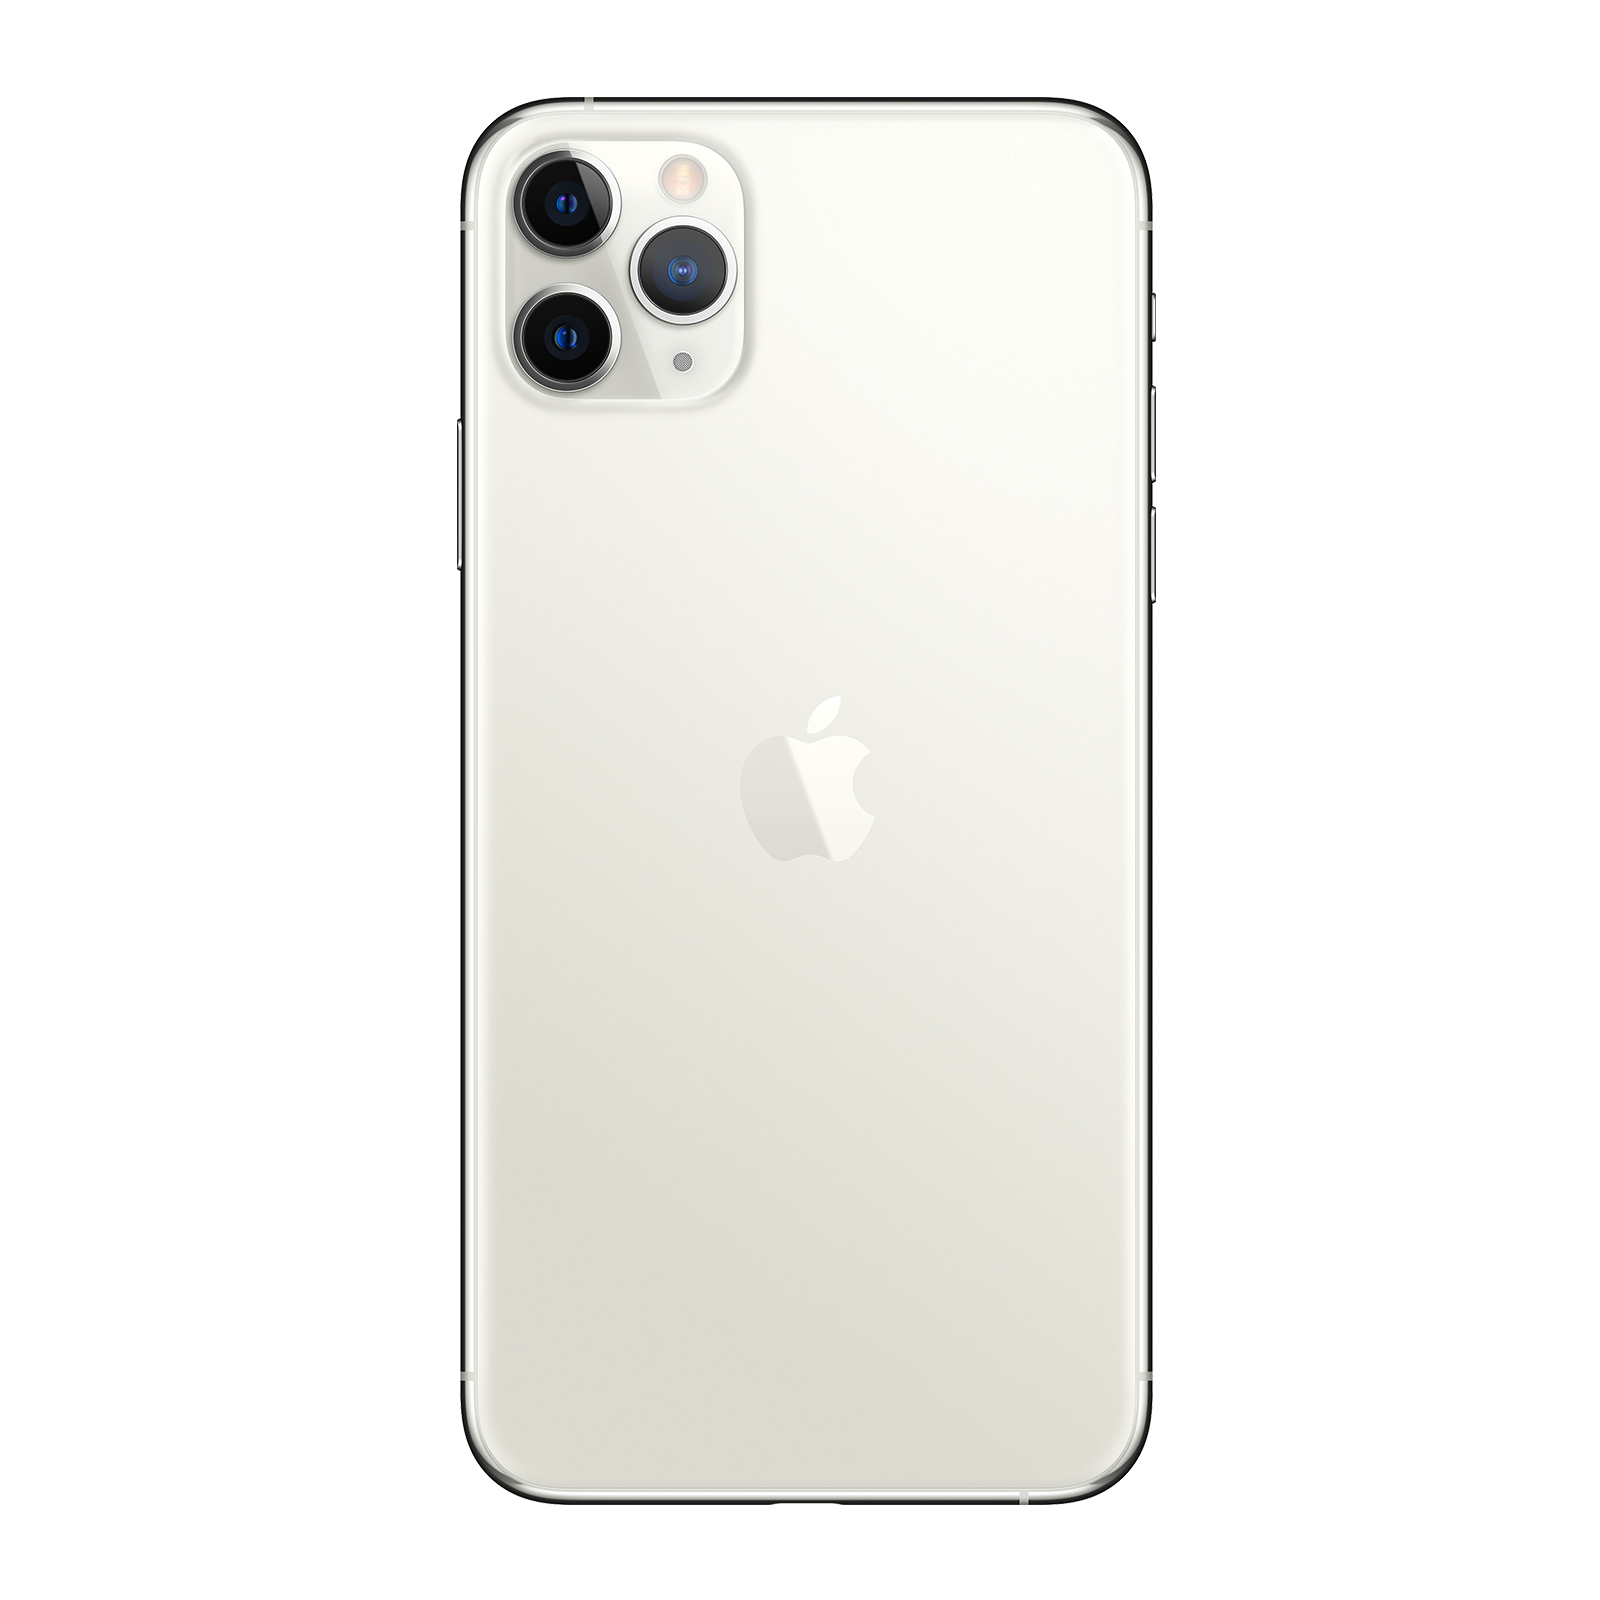 Apple iPhone 11 Pro Max 512GB Silver Very Good - Verizon